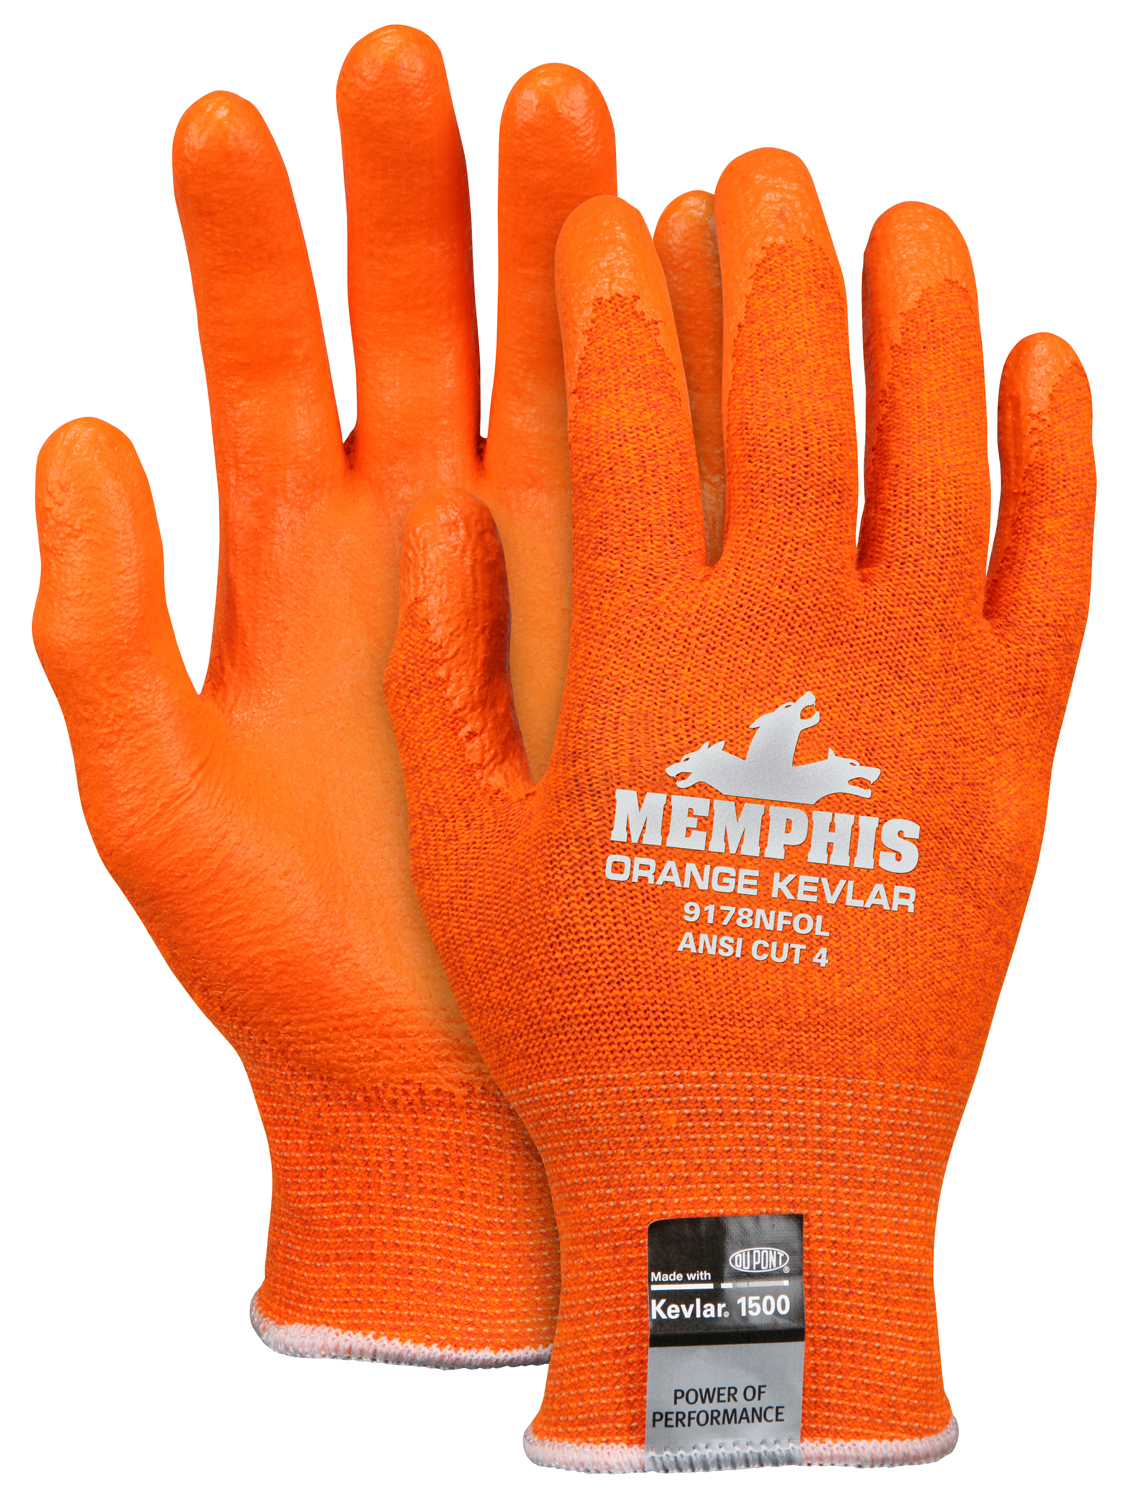 MCR Gloves made with DuPont™ Kevlar®